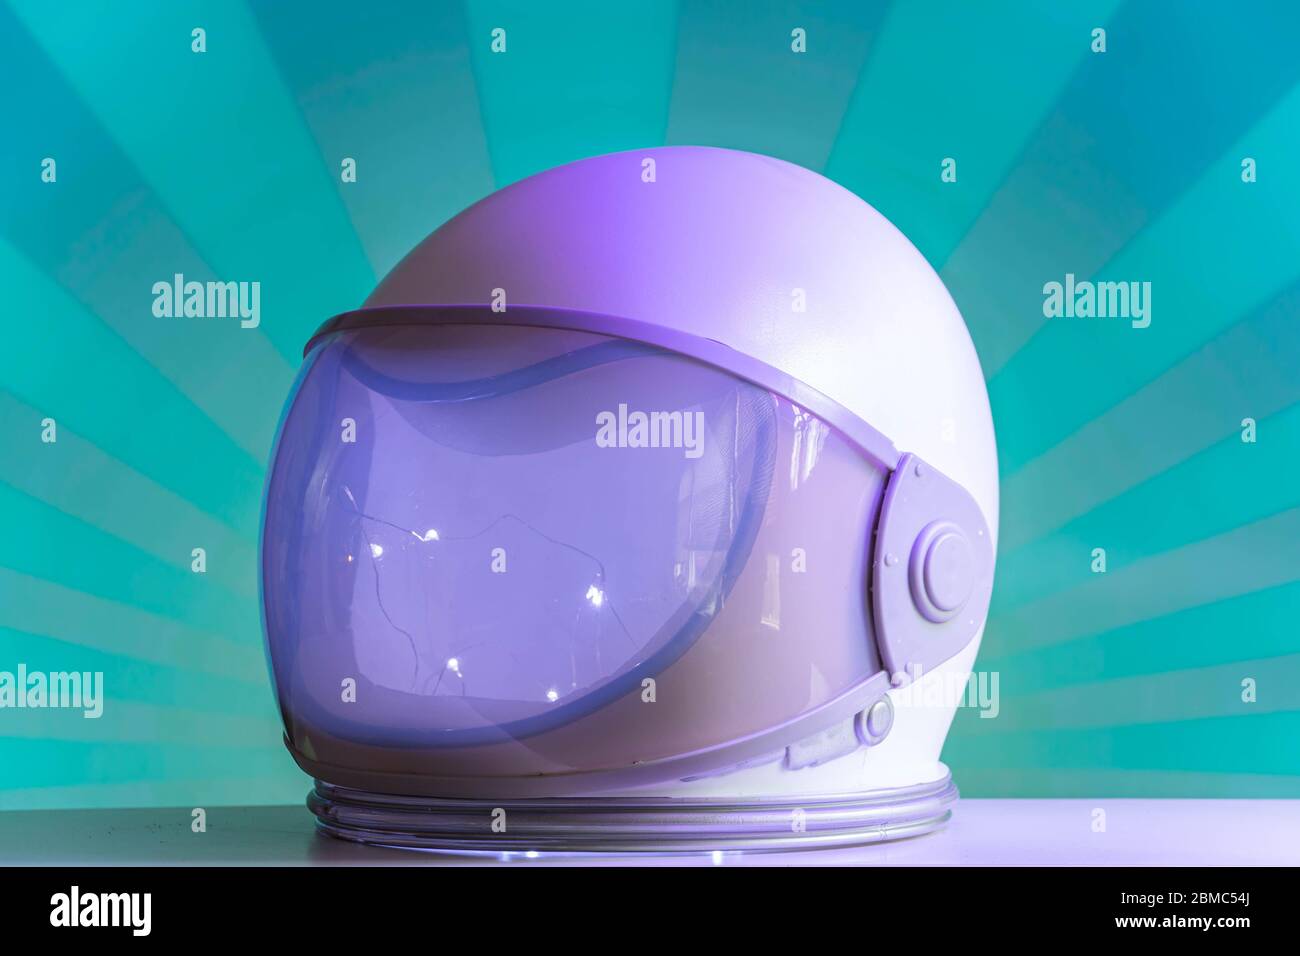 Plastic Astronaut Helmet Space Suit Futuristic Costume With Purple Lighting And A Modern Pop Background Stock Photo Alamy